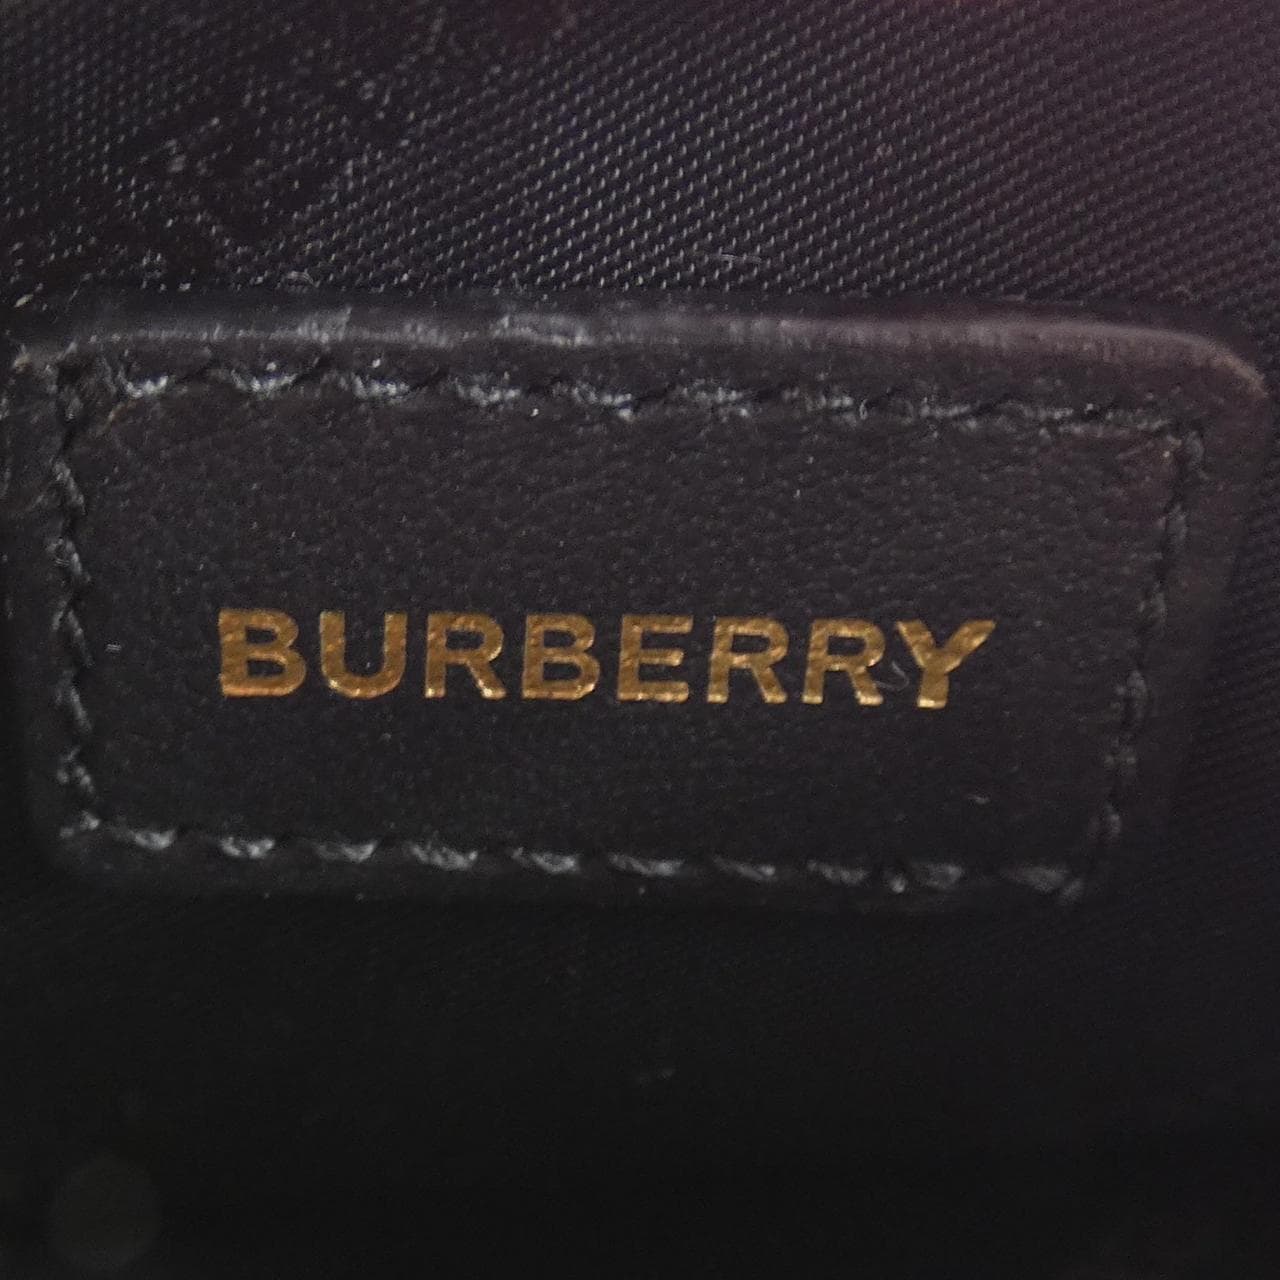 BURBERRY巴宝莉 (Burberry) 零钱包